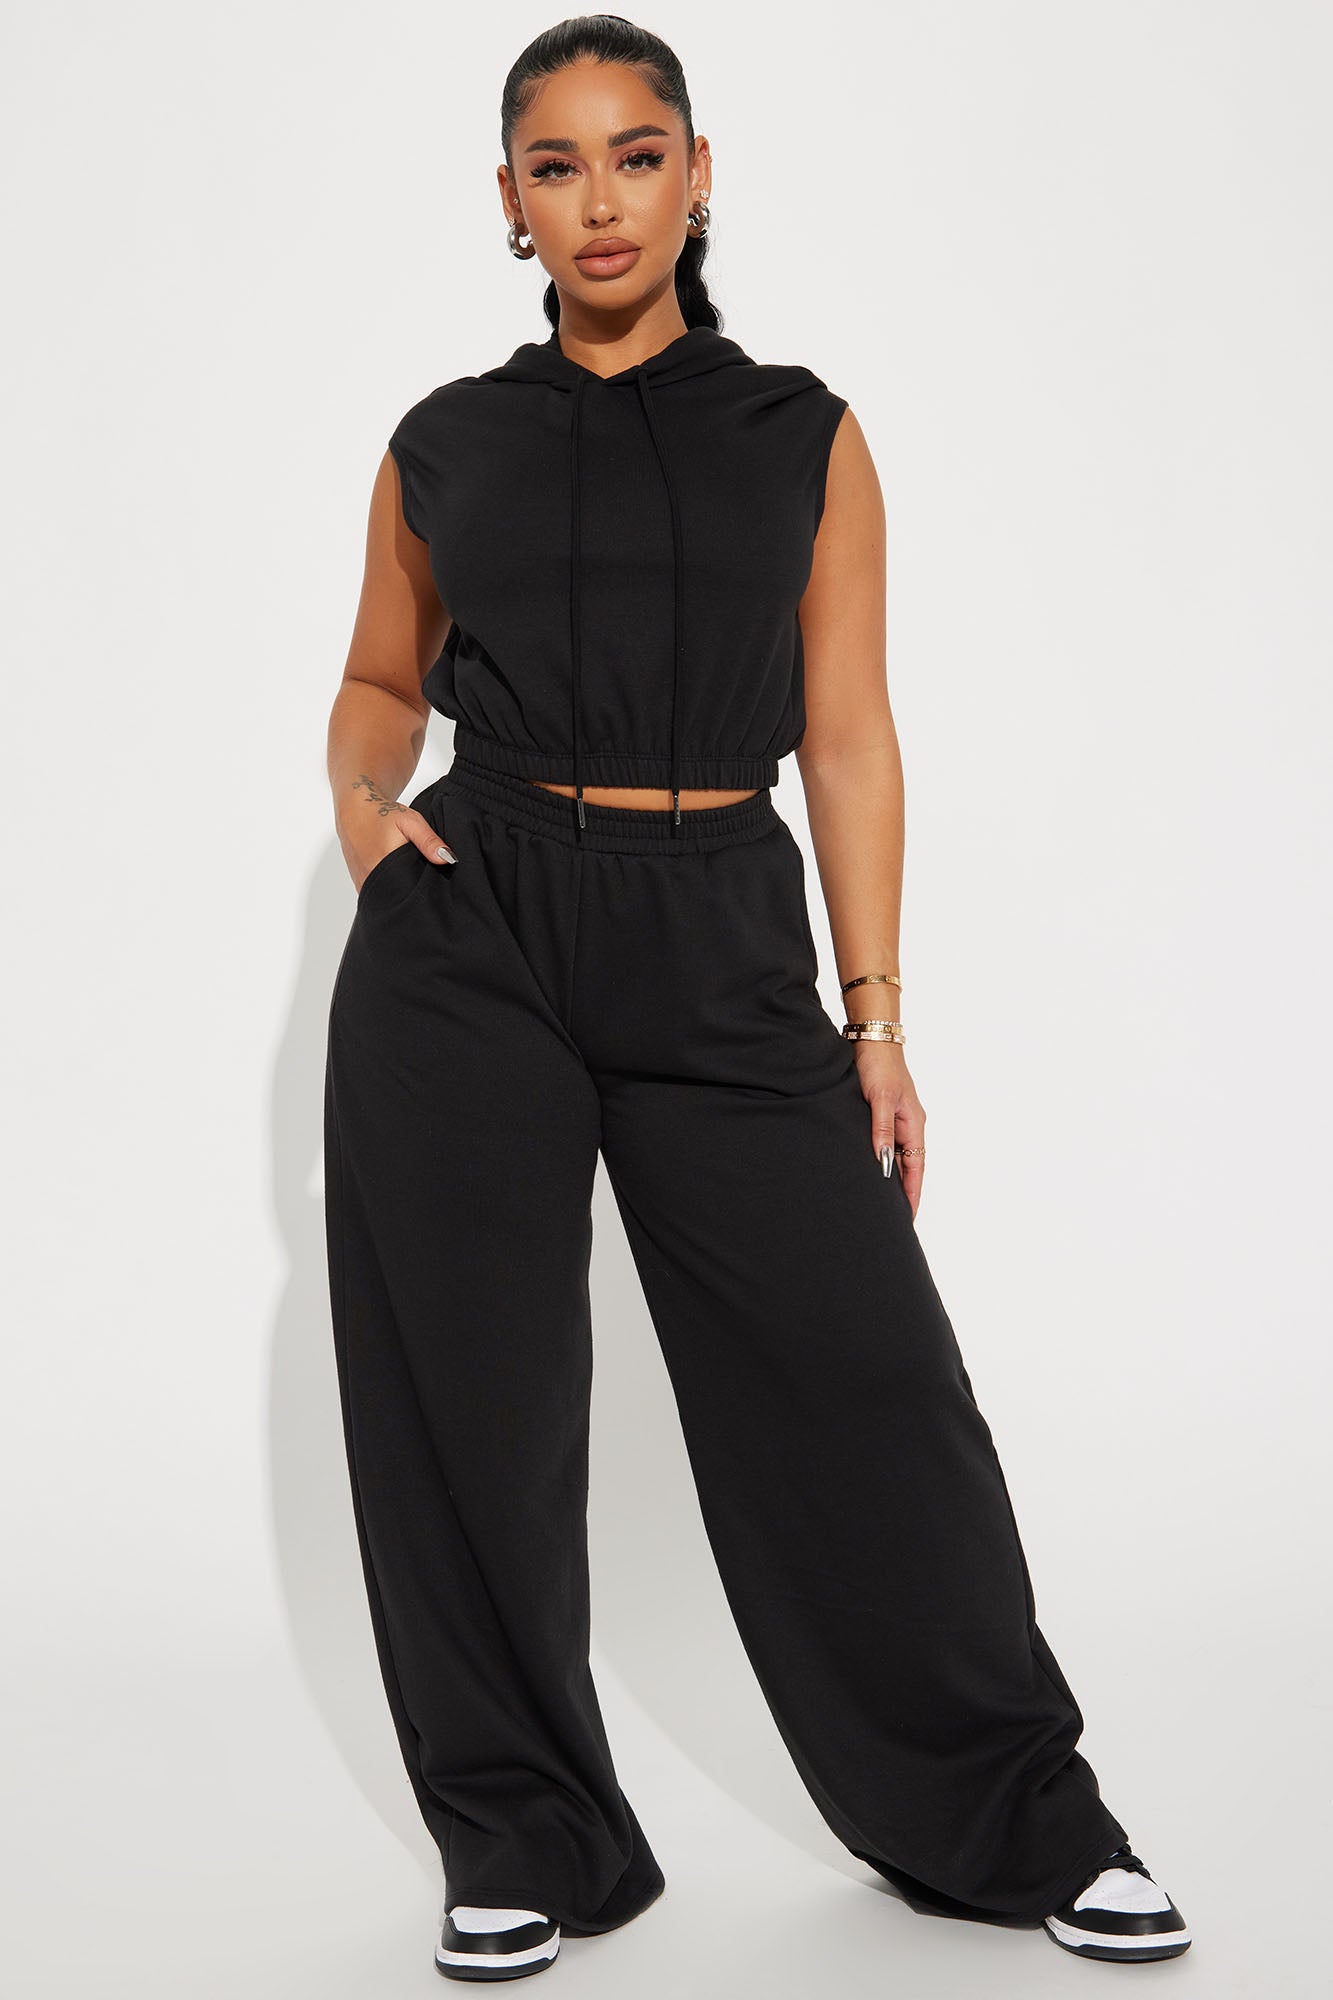 Always Sparkle Sequin Pant Set - Black, Fashion Nova, Matching Sets